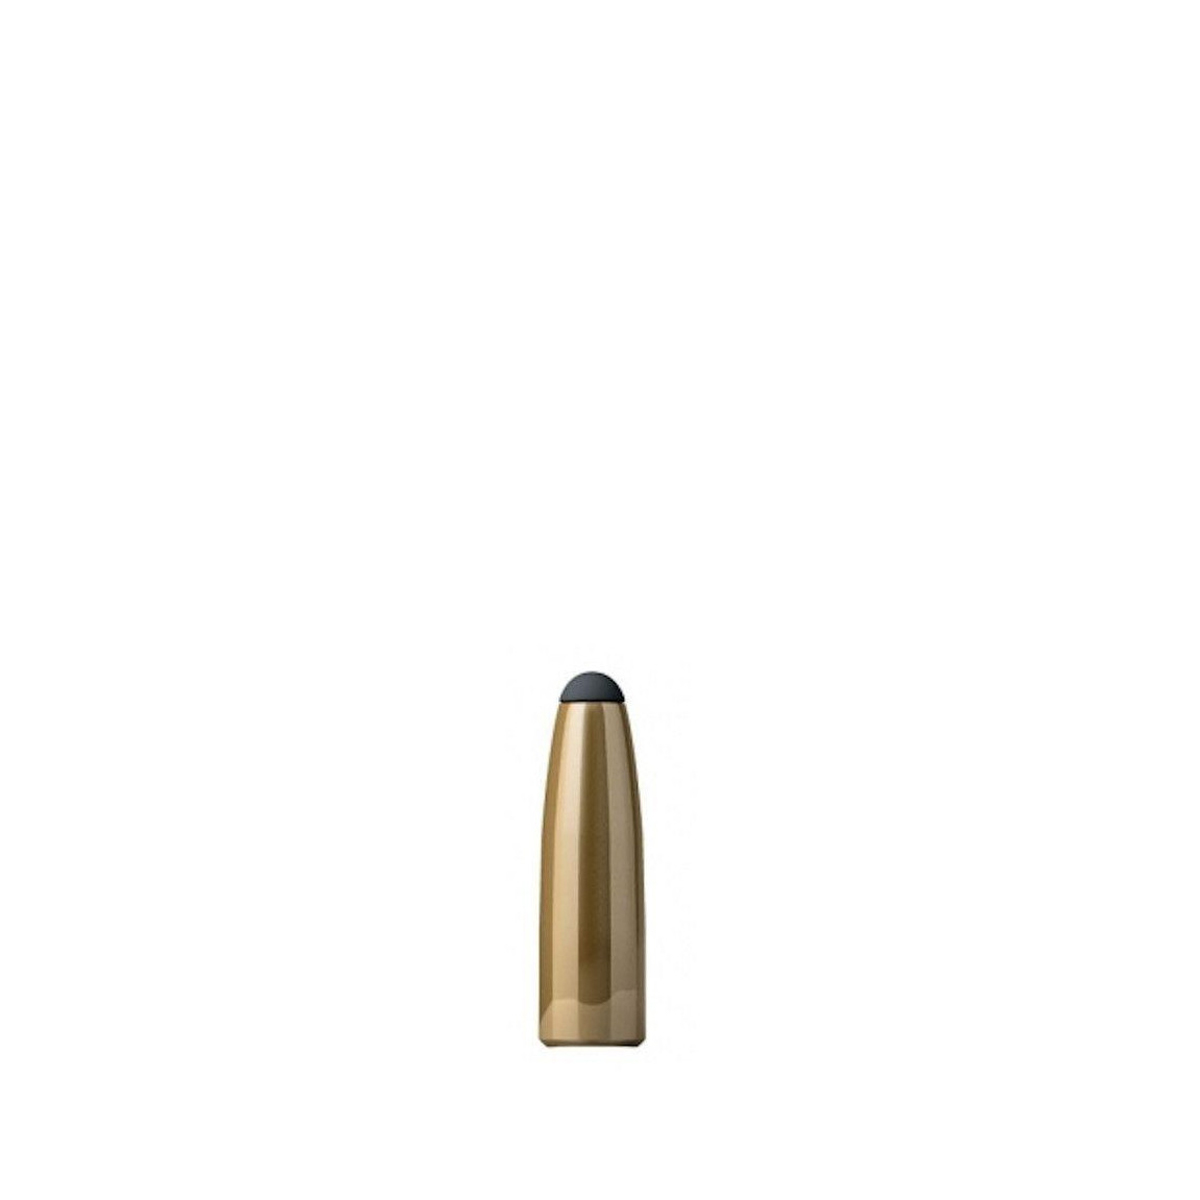 .303 Cal 180Gr SP Bullets